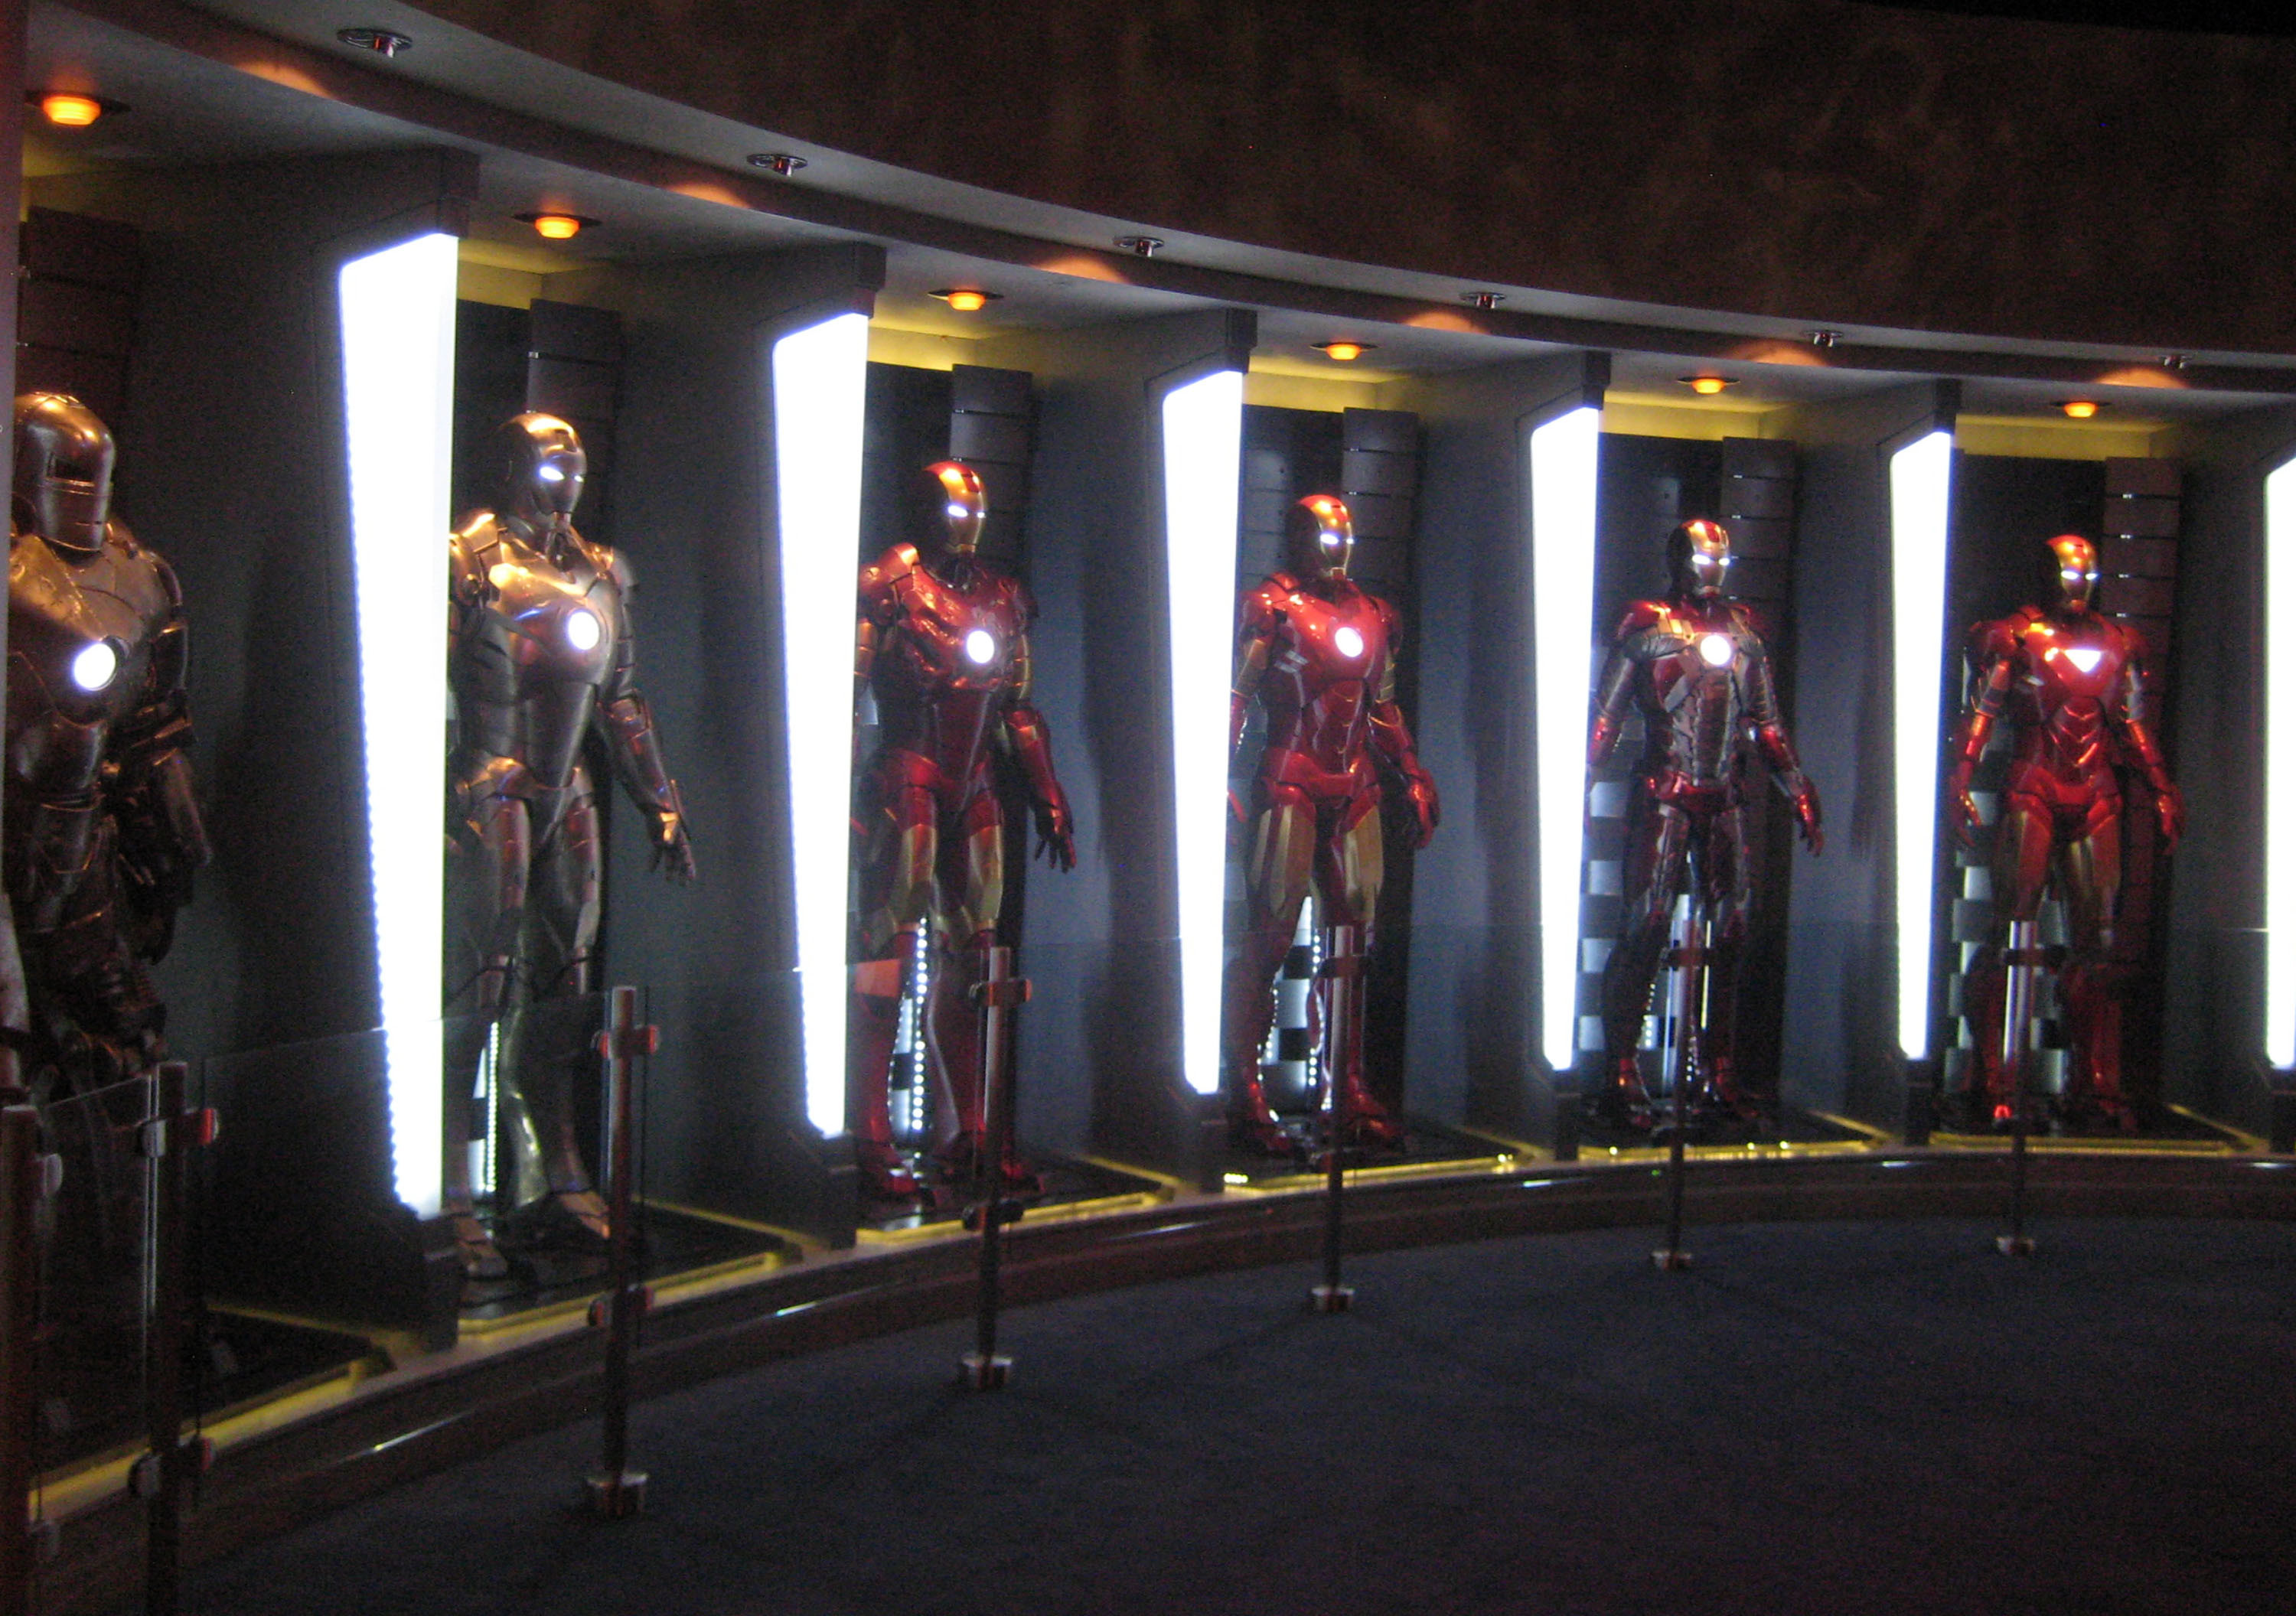 iron man 3 suits wallpaper 1080p